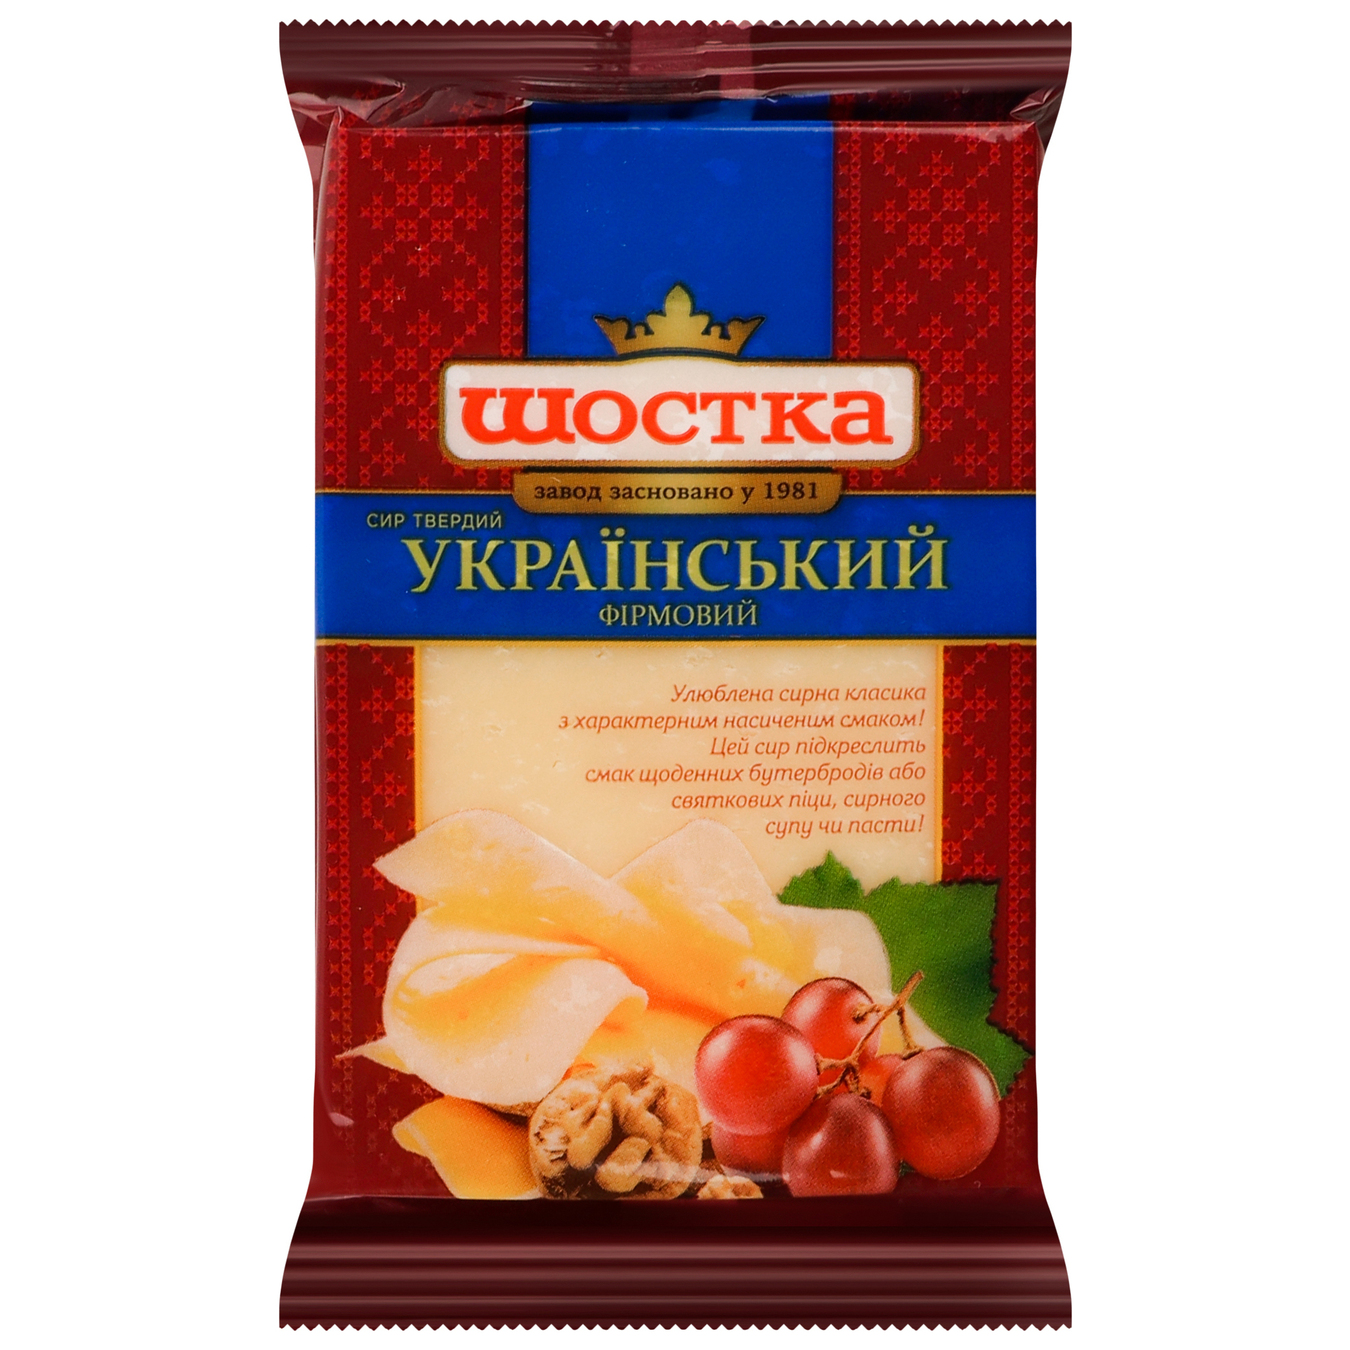 Shostka hard Ukrainian cheese 50% 160g